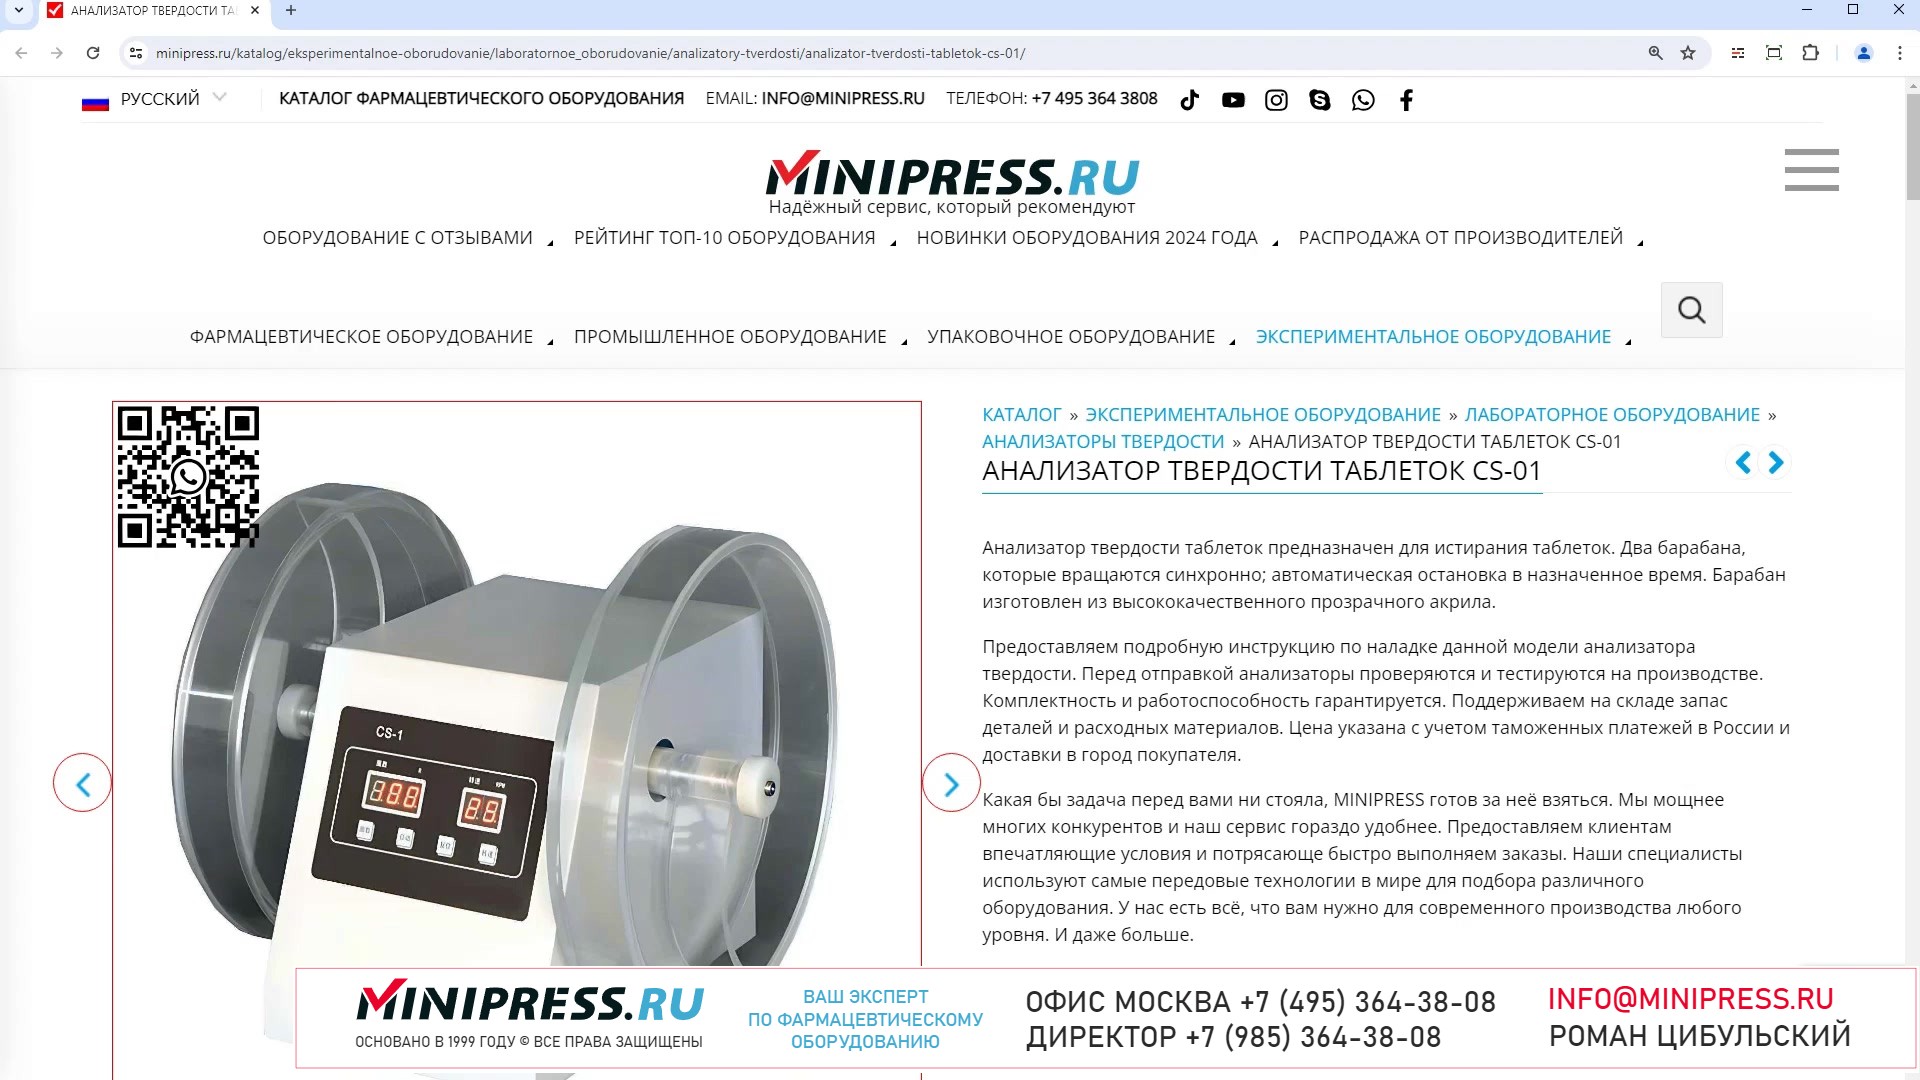 Minipress.ru Анализатор твердости таблеток CS-01